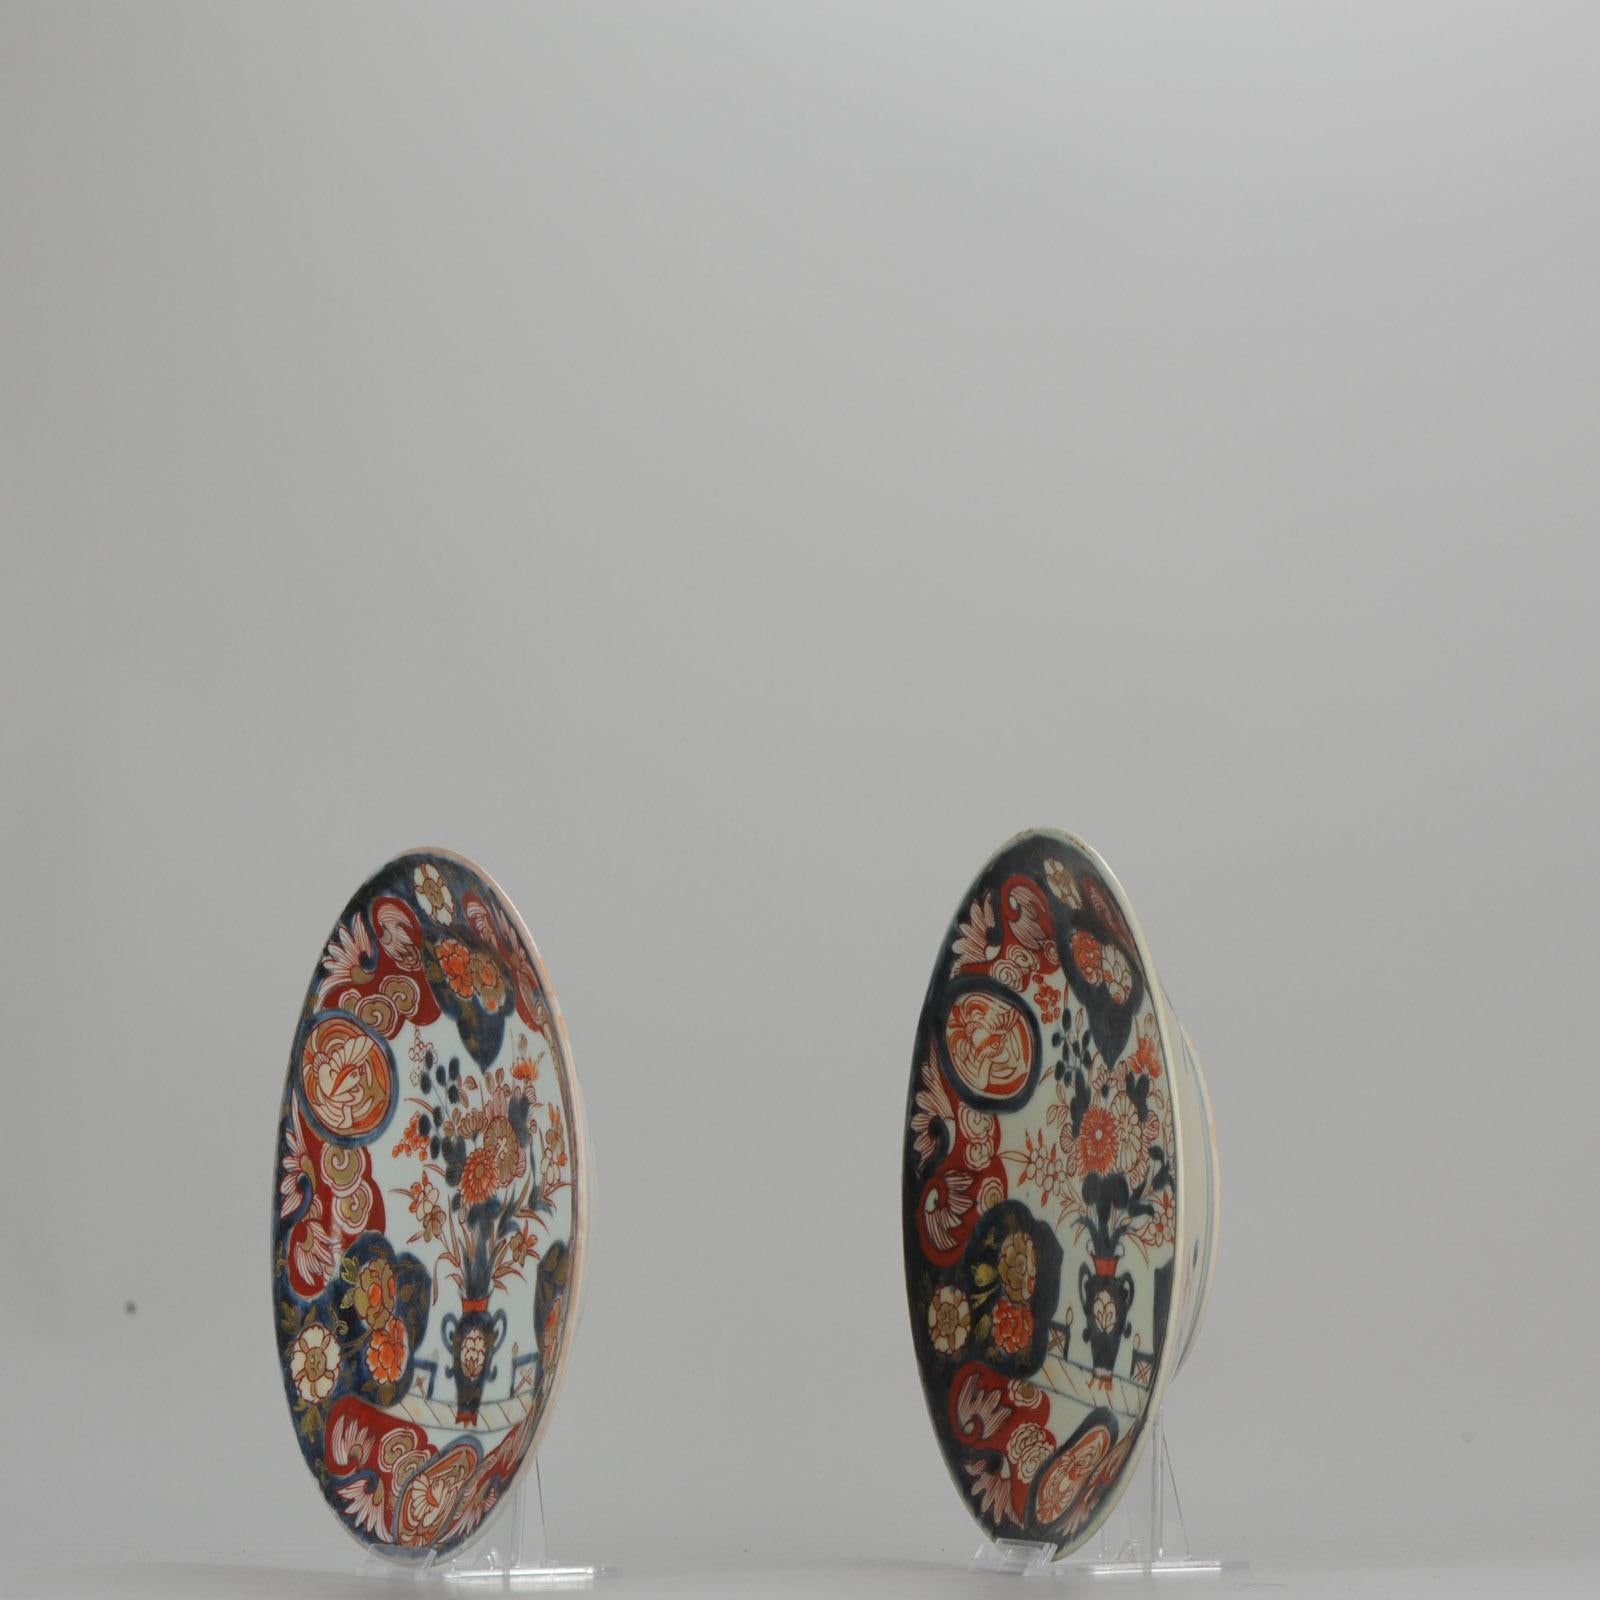 Earthenware Antique circa 1700 Japanese Imari Porcelain Plates Arita Edo Flowers